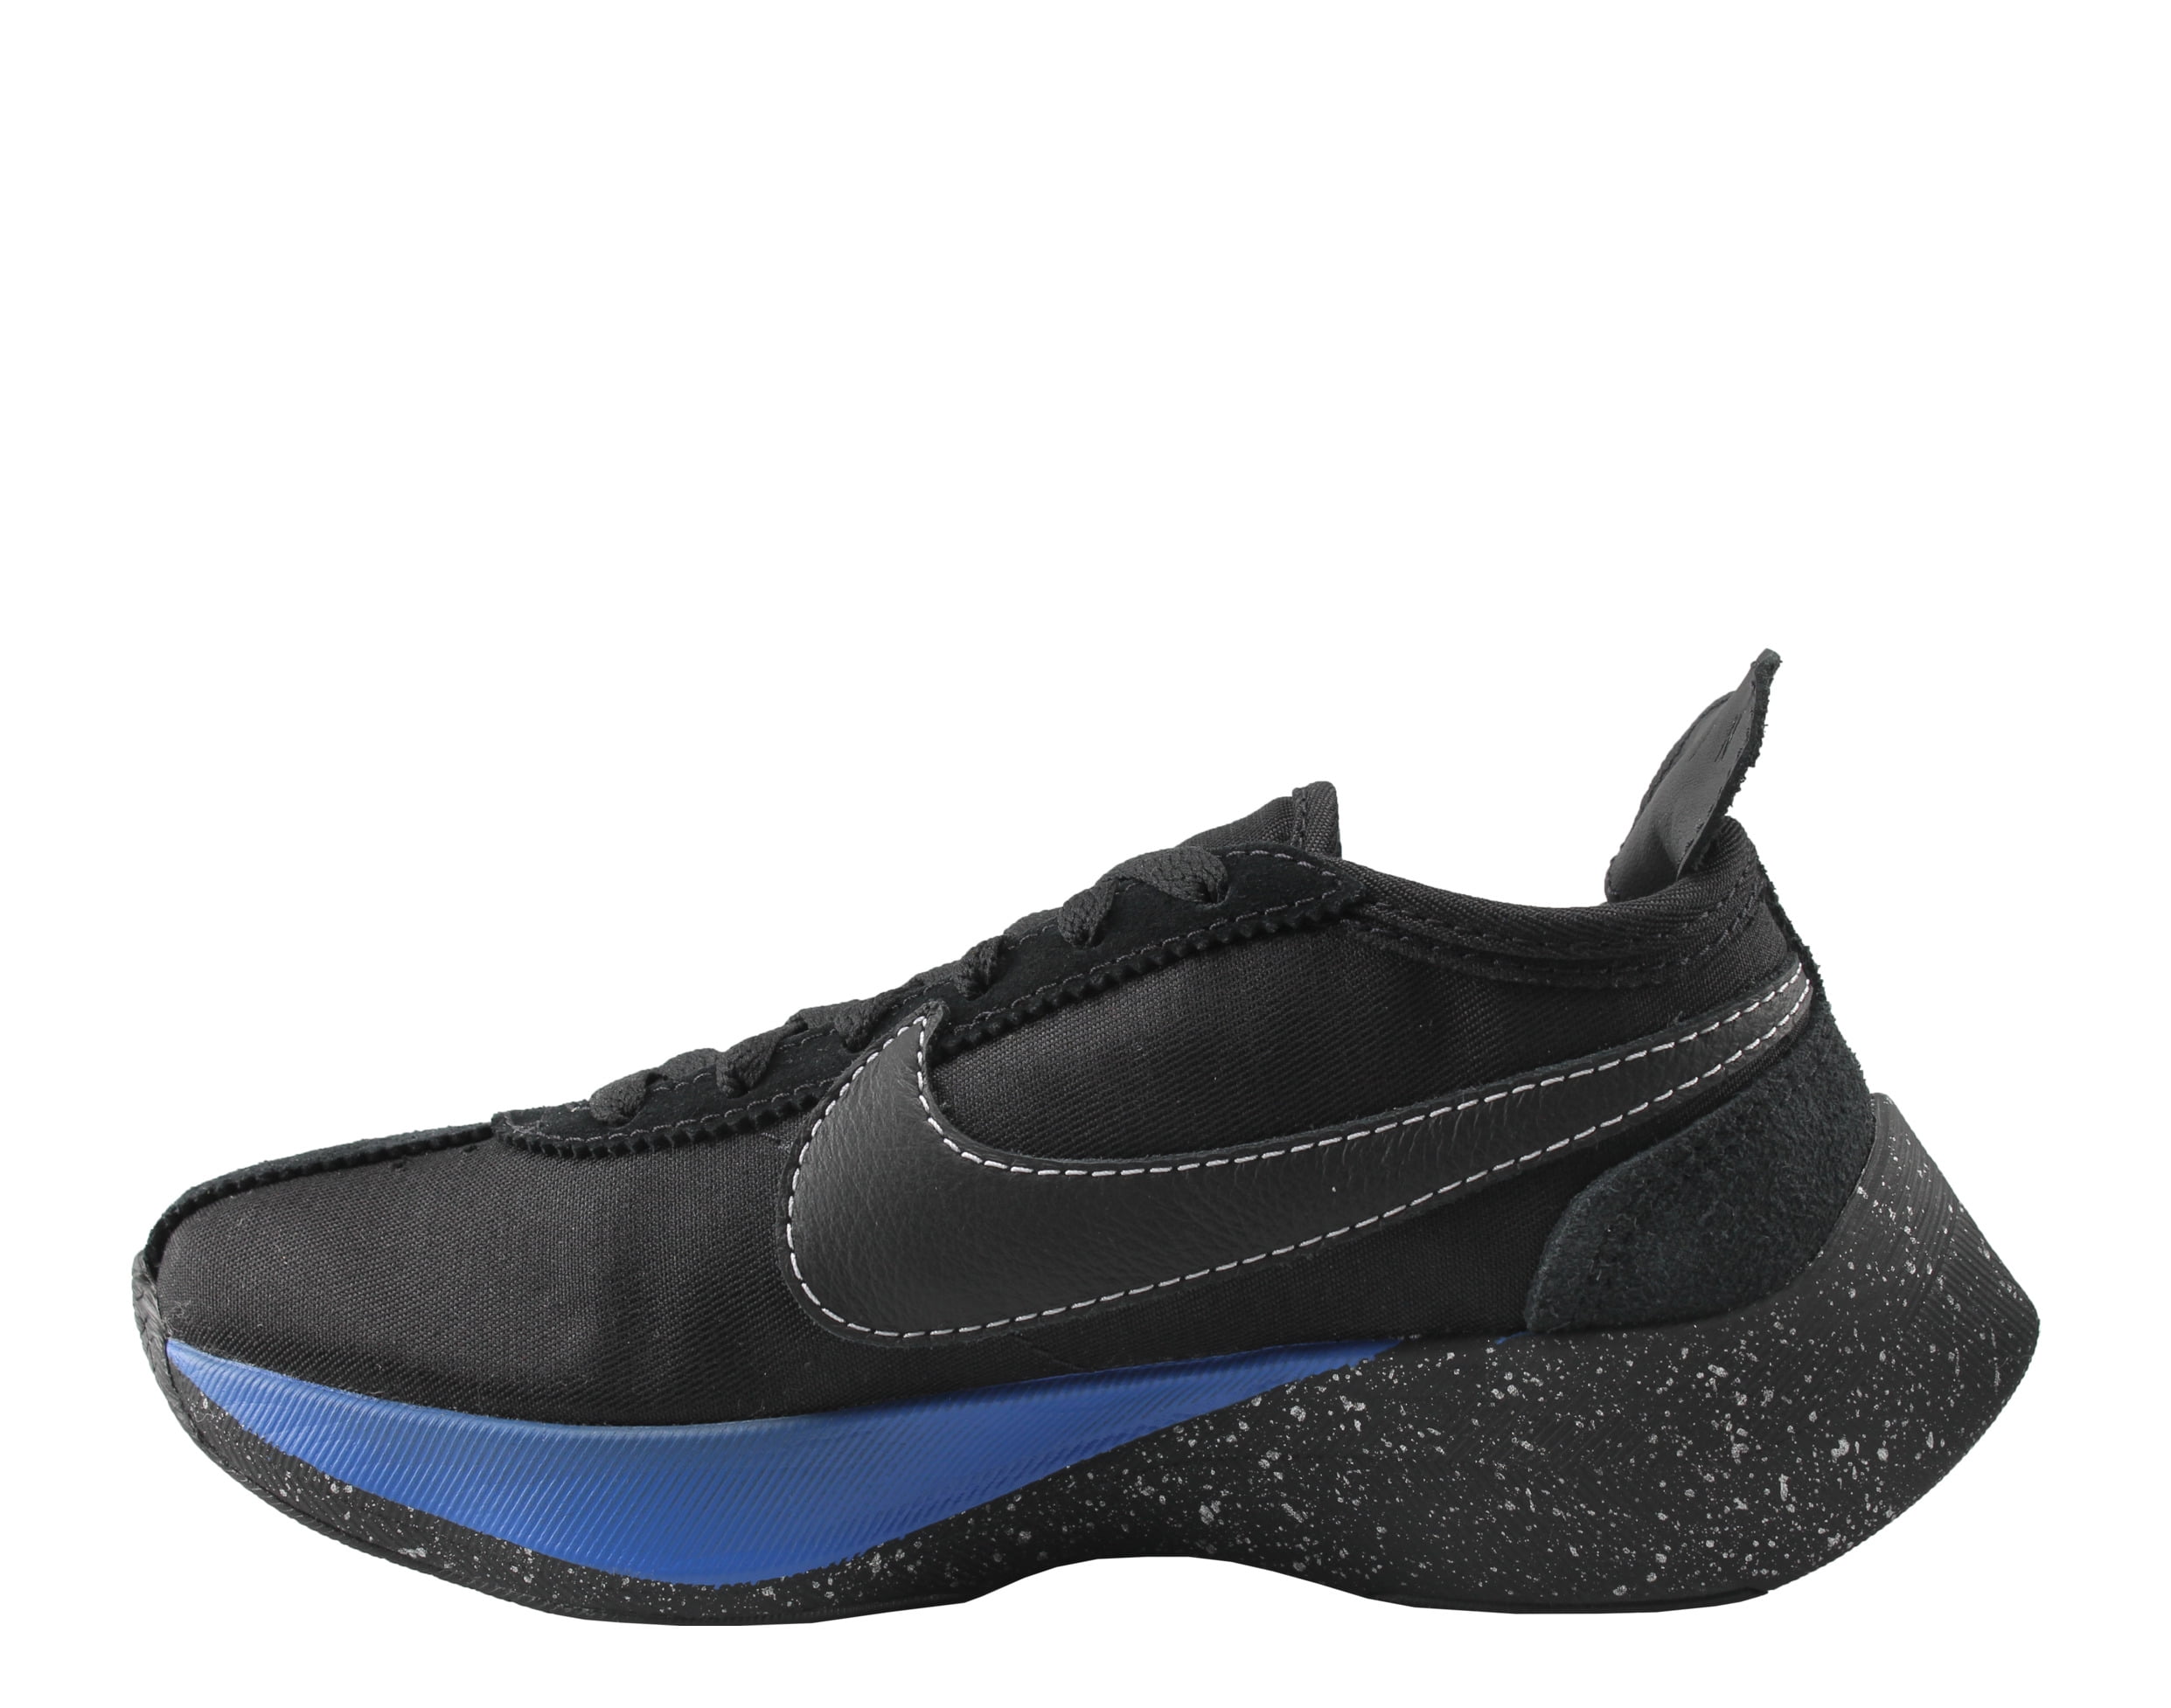 Gepland Terughoudendheid ramp Nike Moon Racer QS Men's Running Shoes Size 11 - Walmart.com